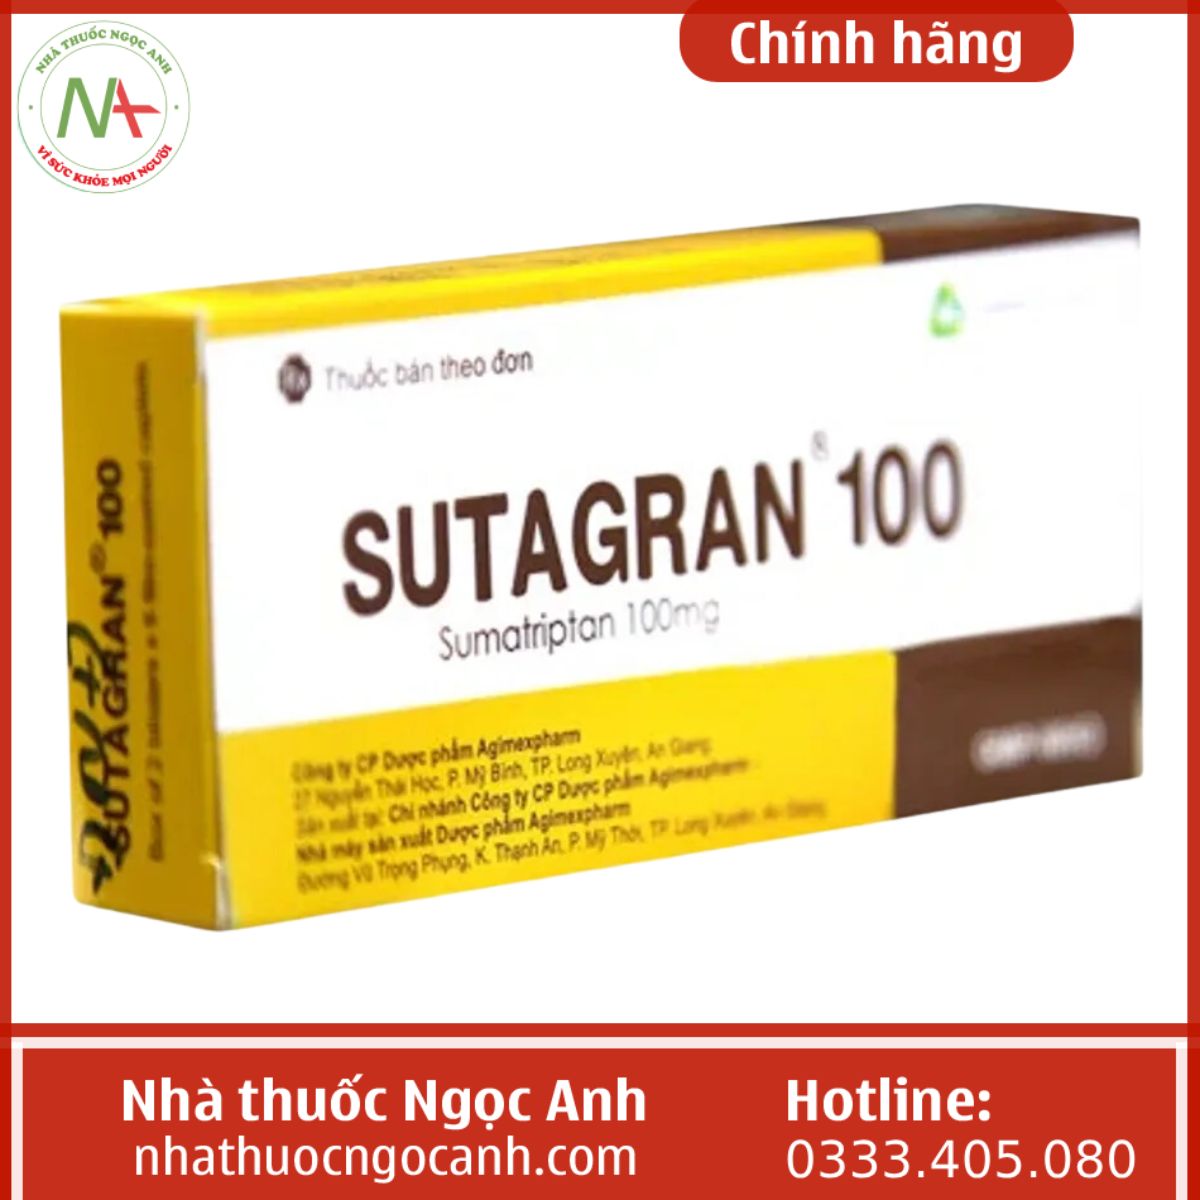 Sutagran 100 trị đau nửa đầu